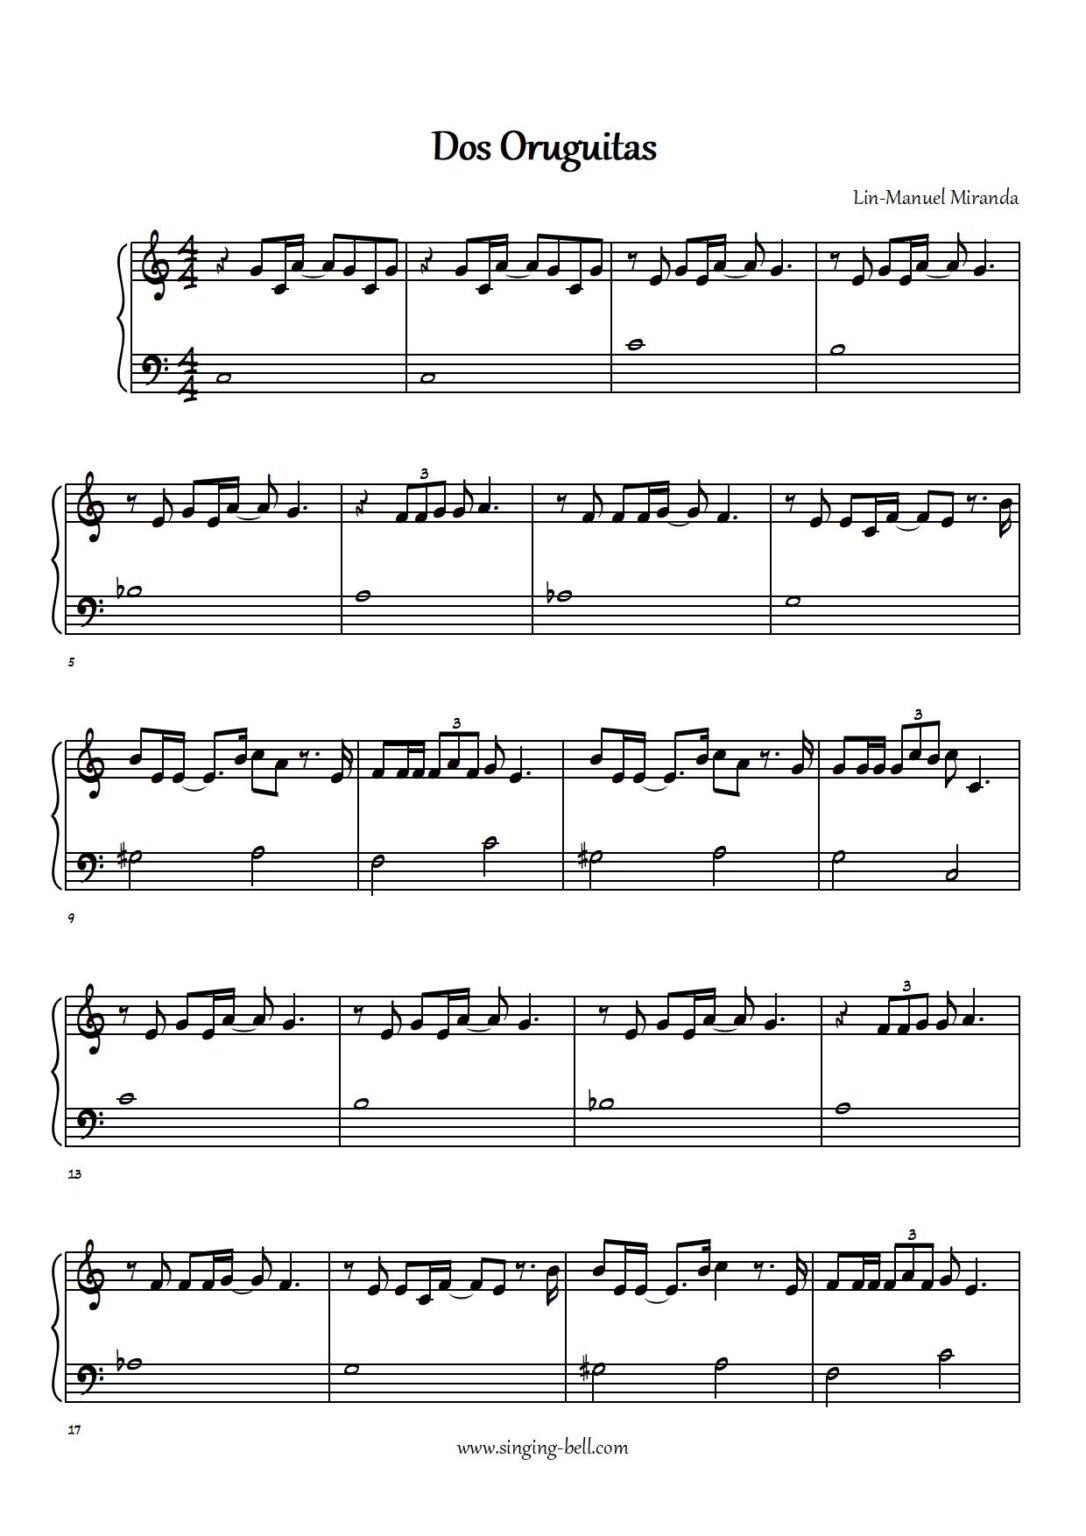 Dos Oruguitas – Piano Tutorial, Sheet Music, Notes, Chords